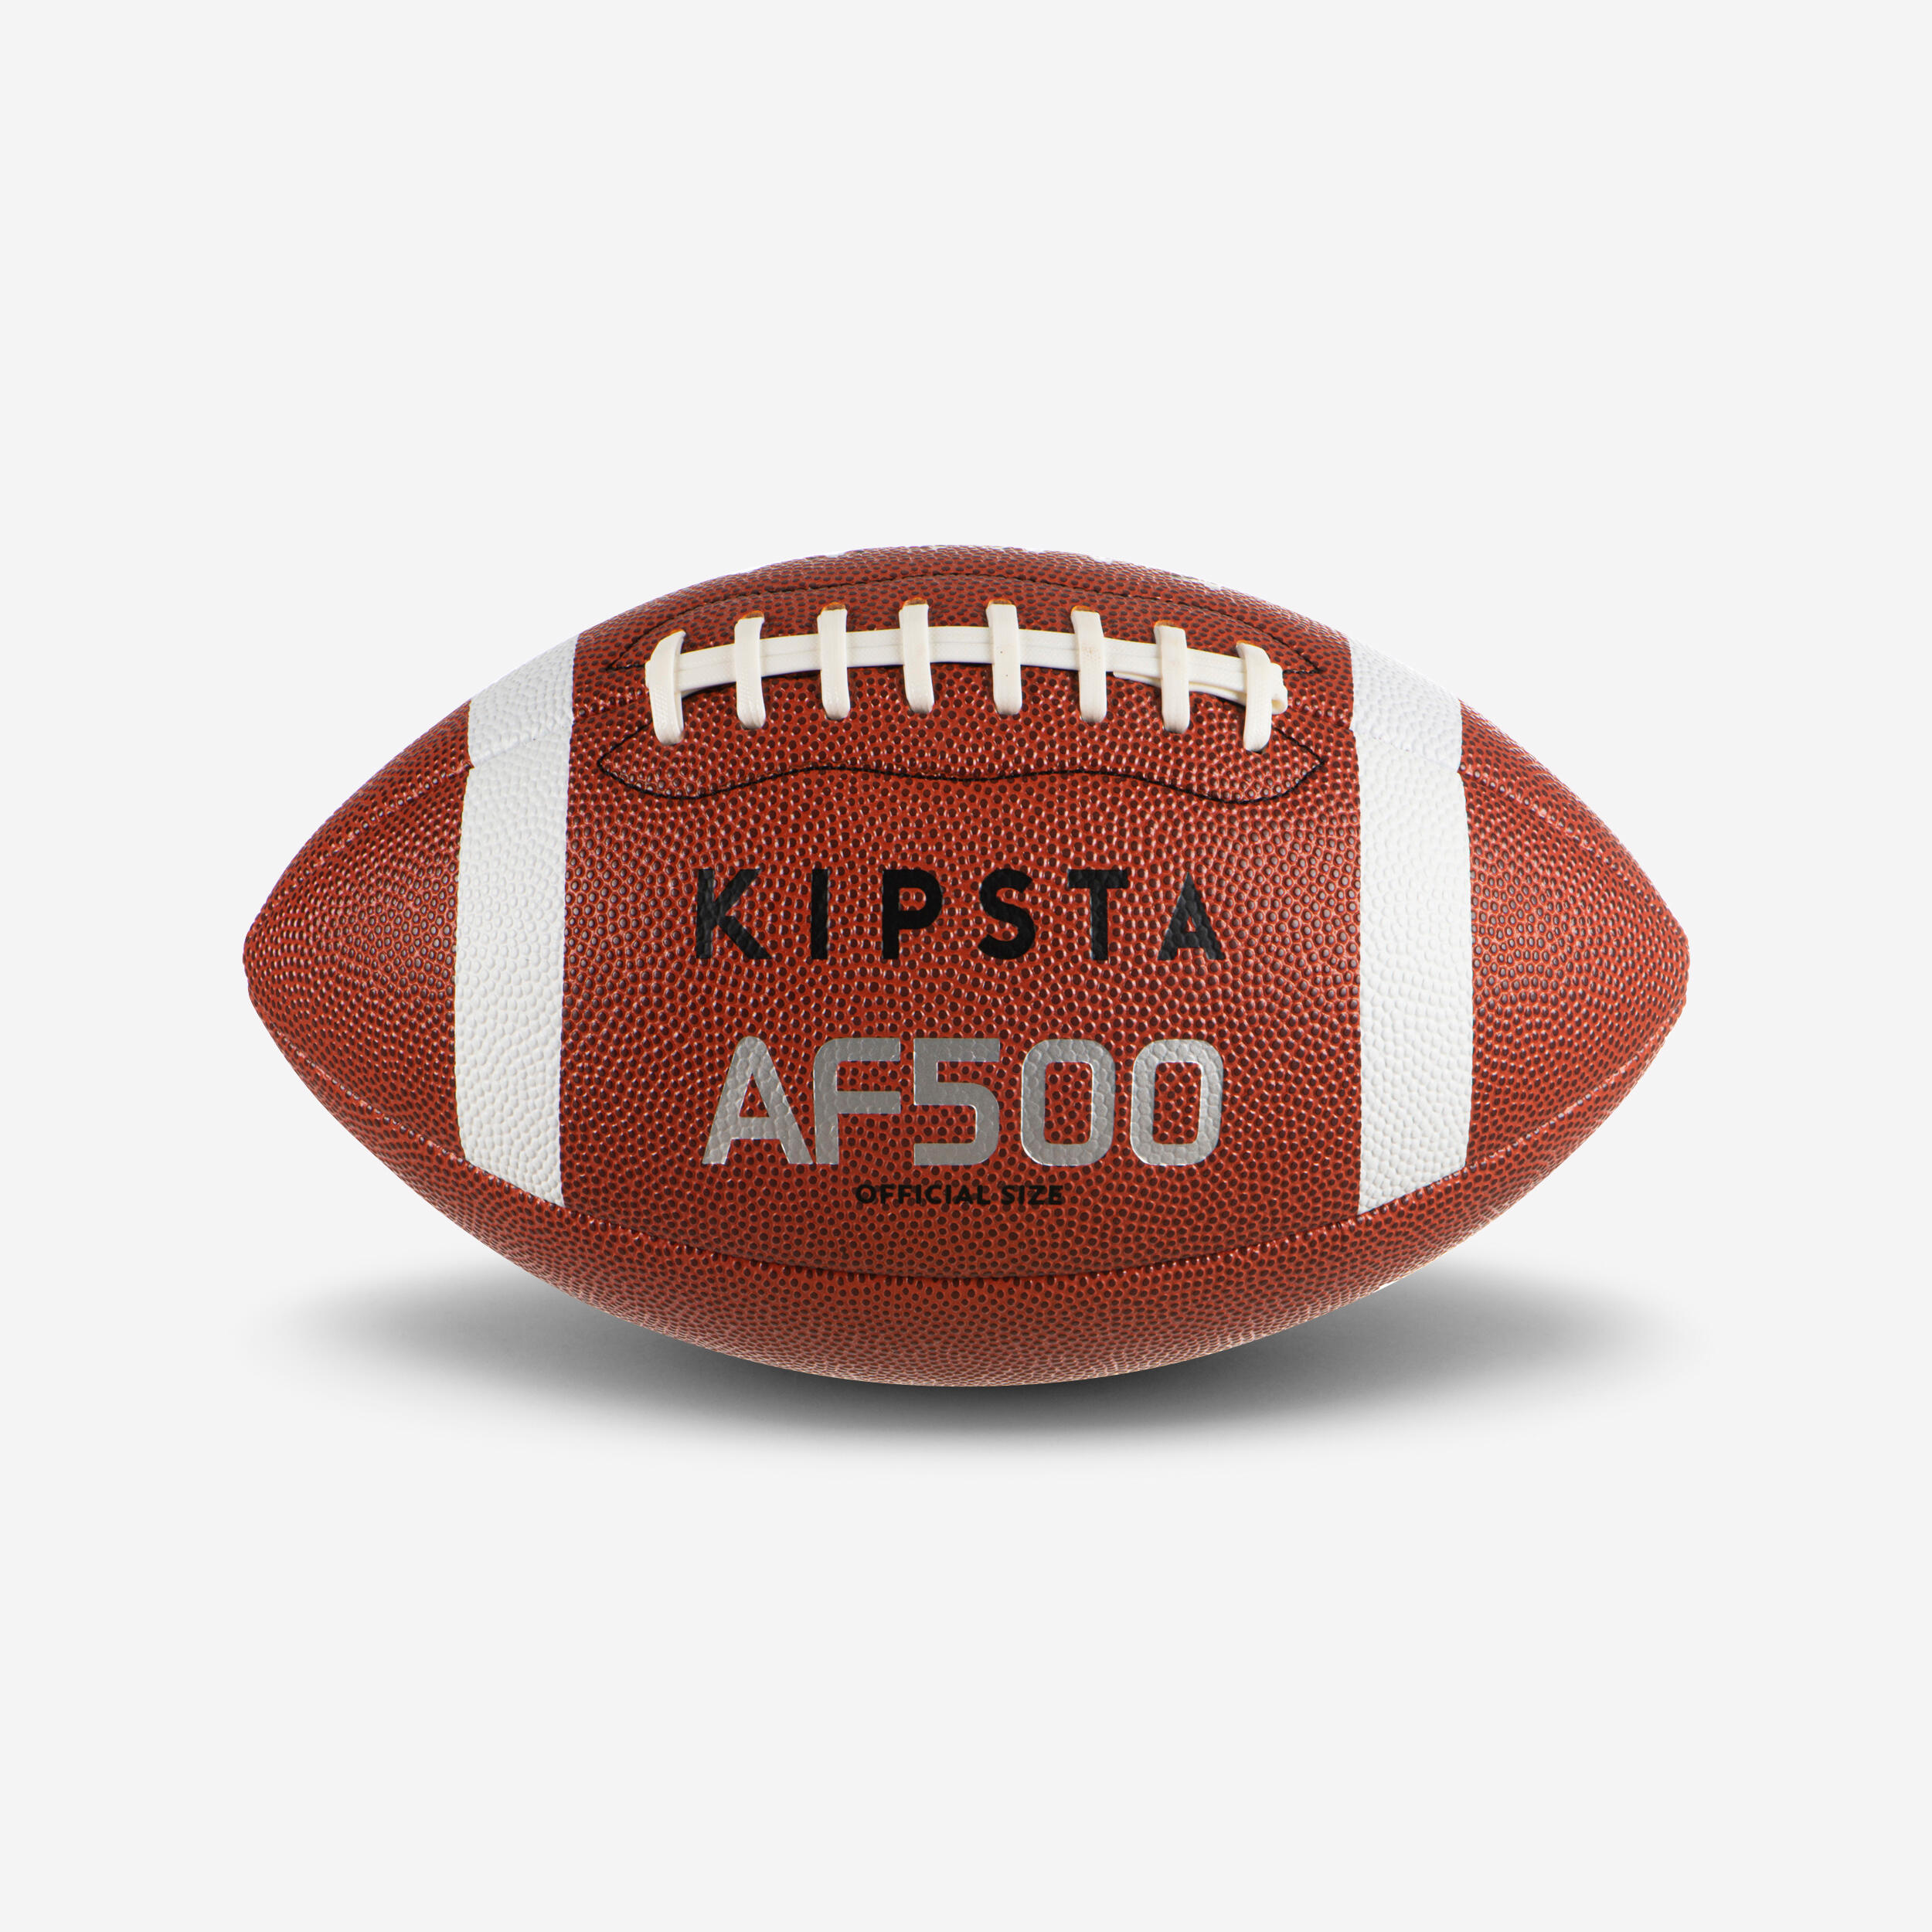 Official Size Football - AF 500 BOF Brown - KIPSTA